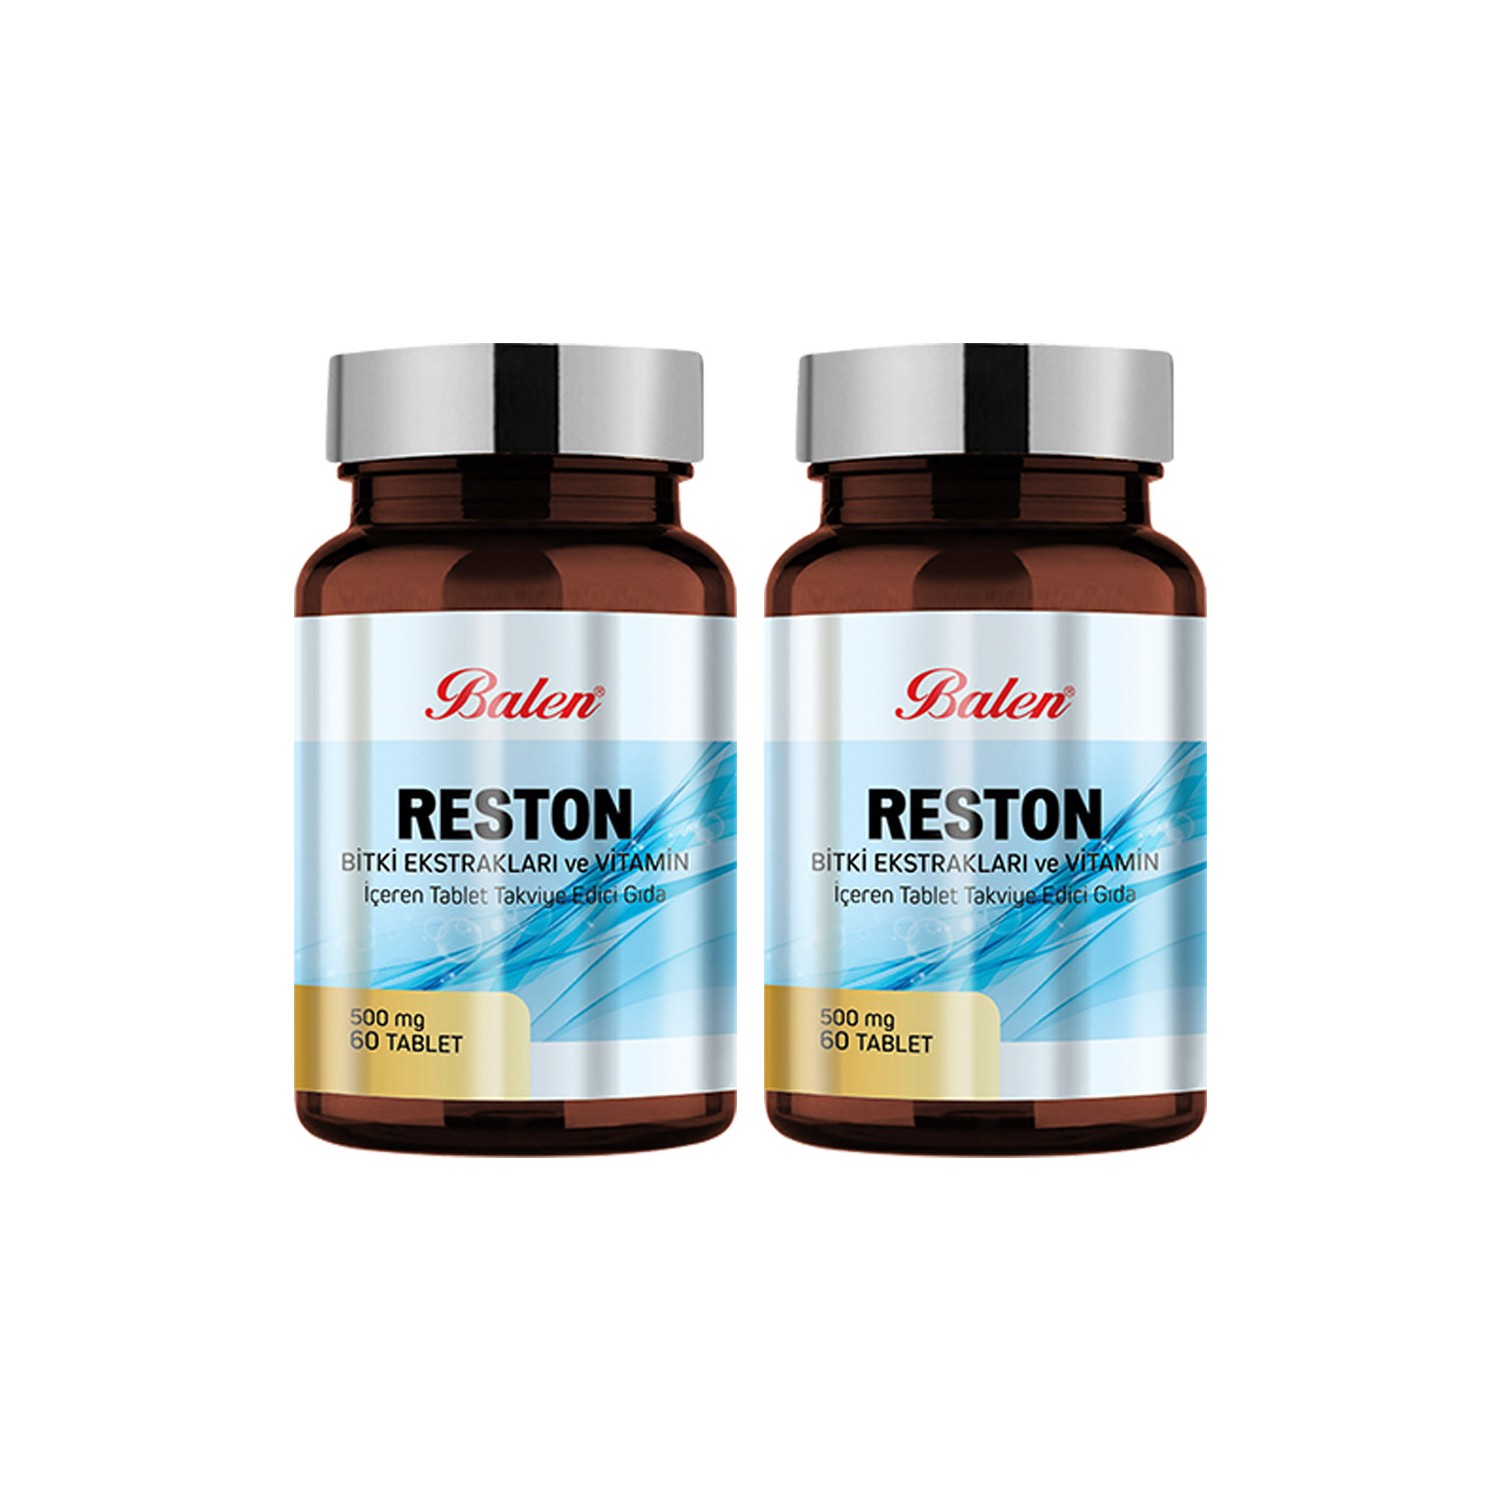 Пищевая добавка Balen Reston 500 мг, 2 упаковки по 60 капсул сиофор таблетки 500 мг 60 шт